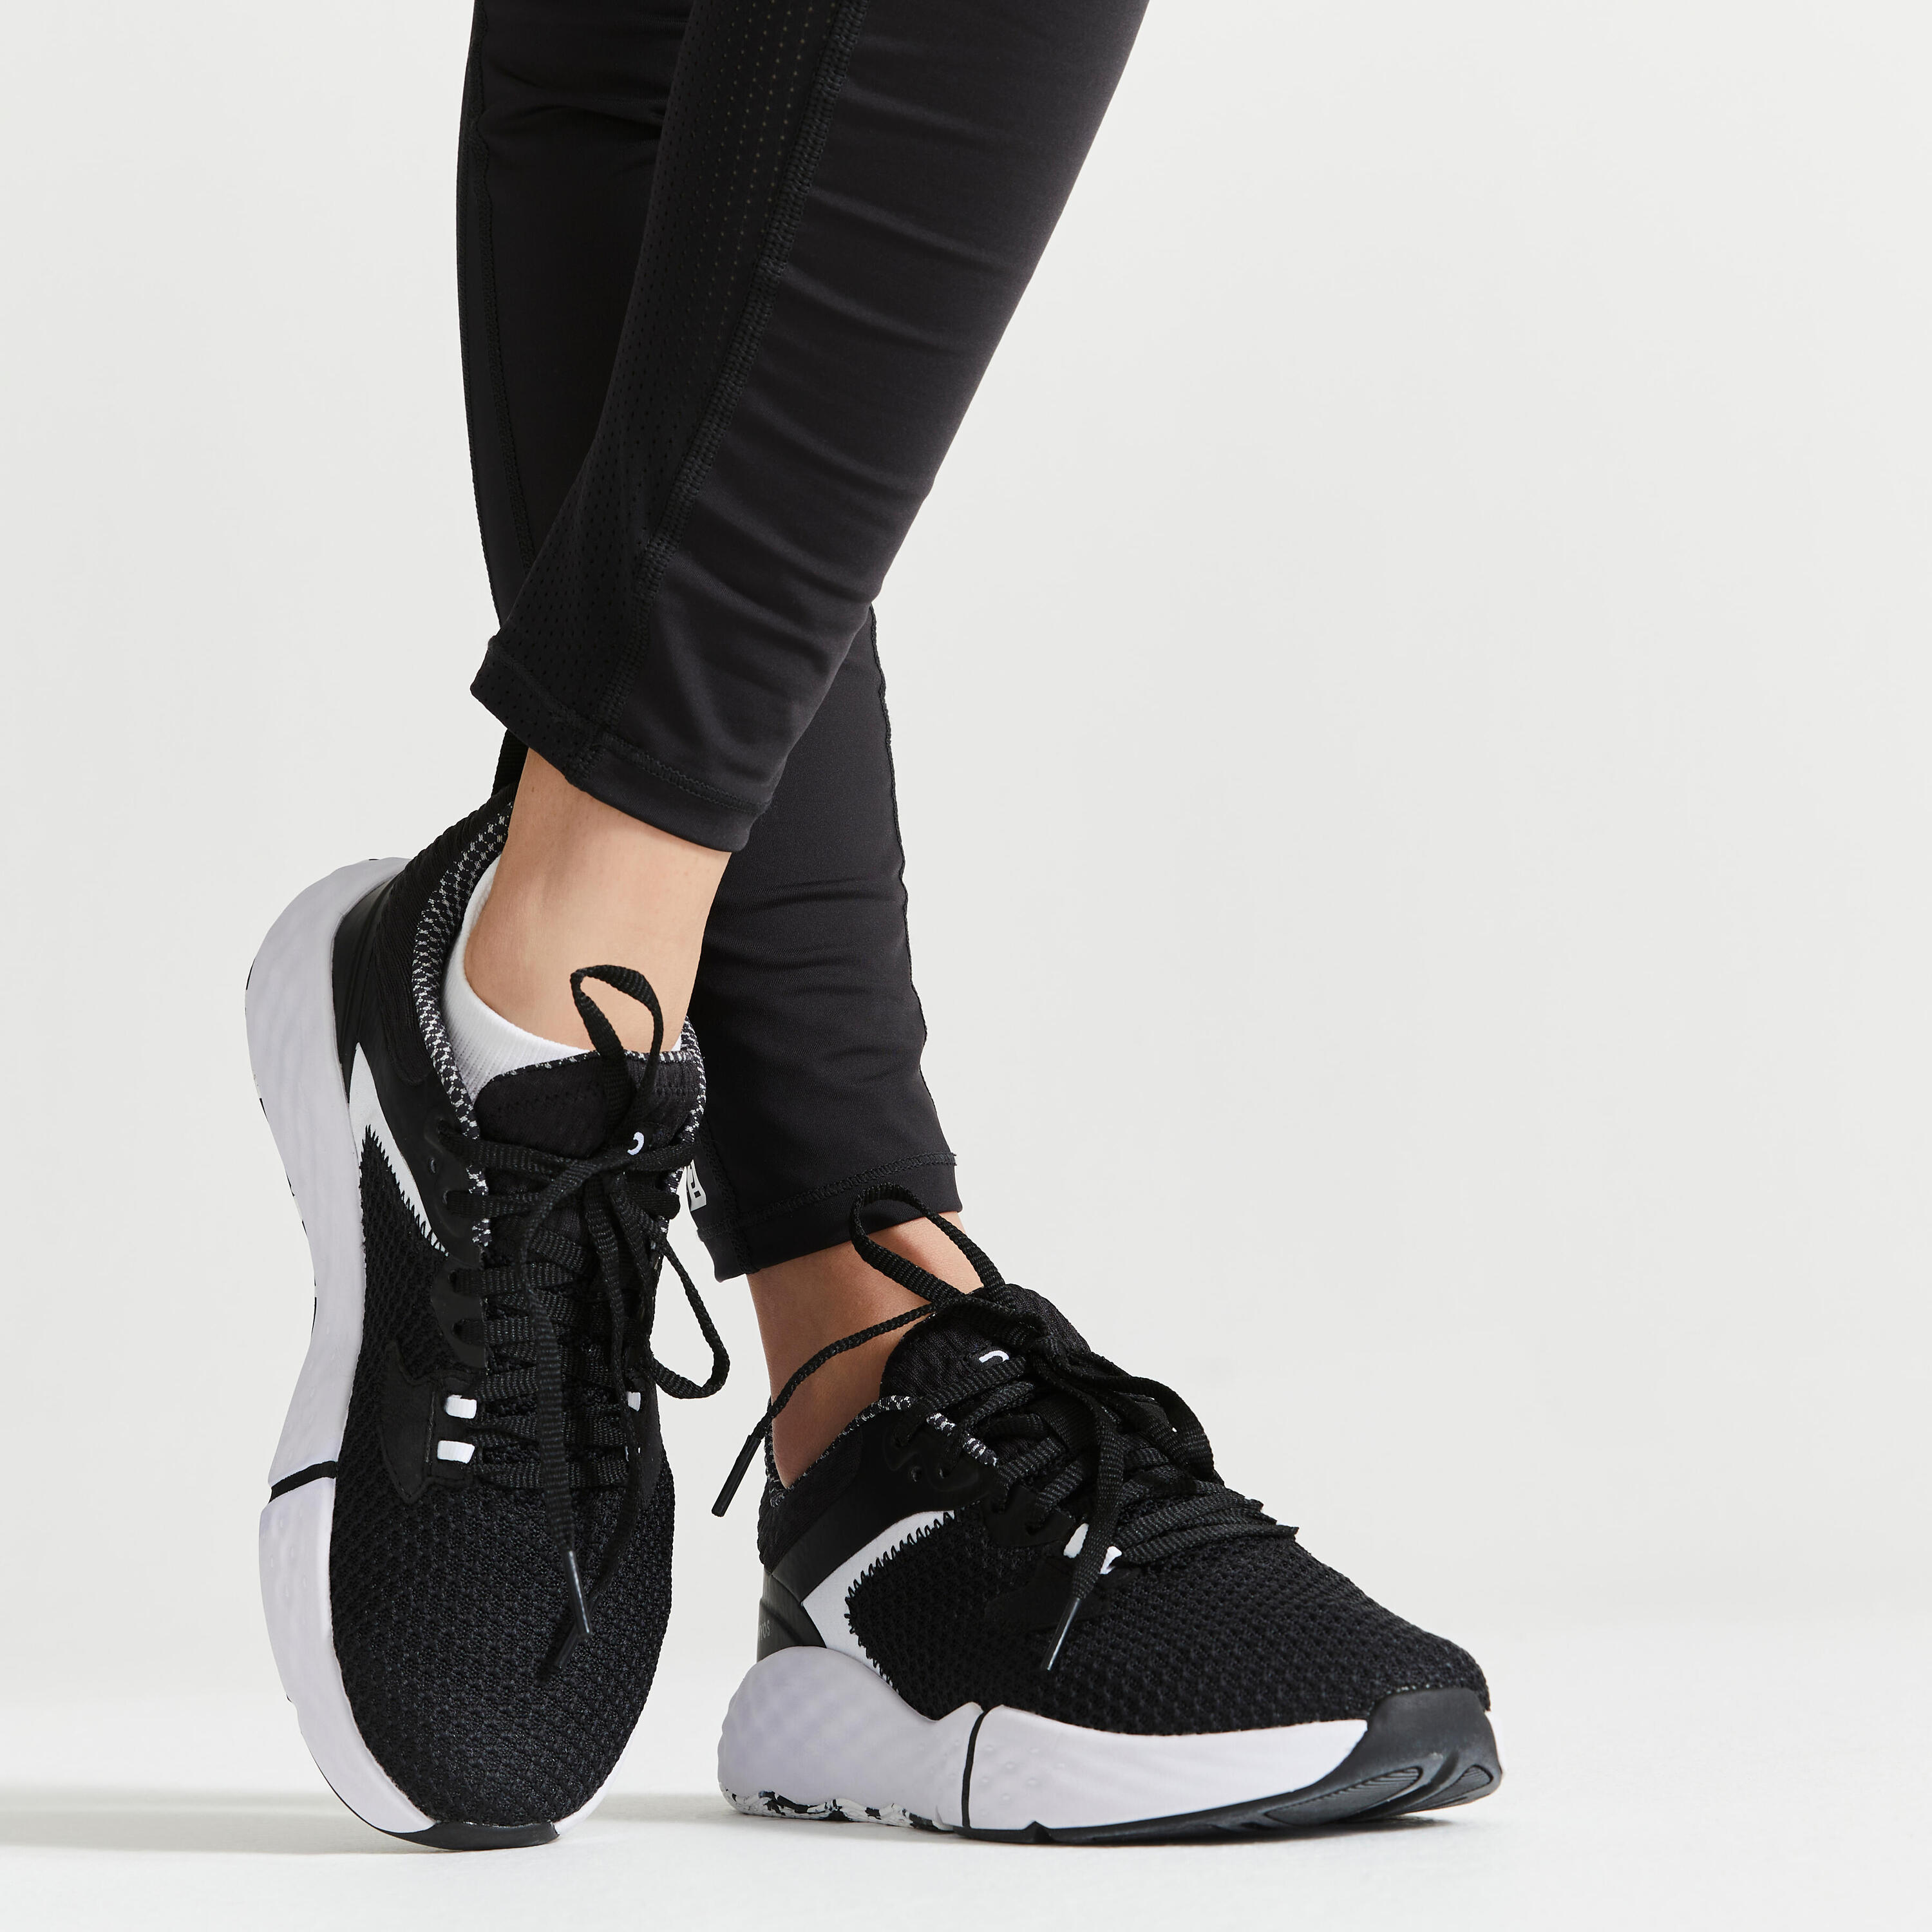 Women's Fitness Shoes 520 - Black 5/13